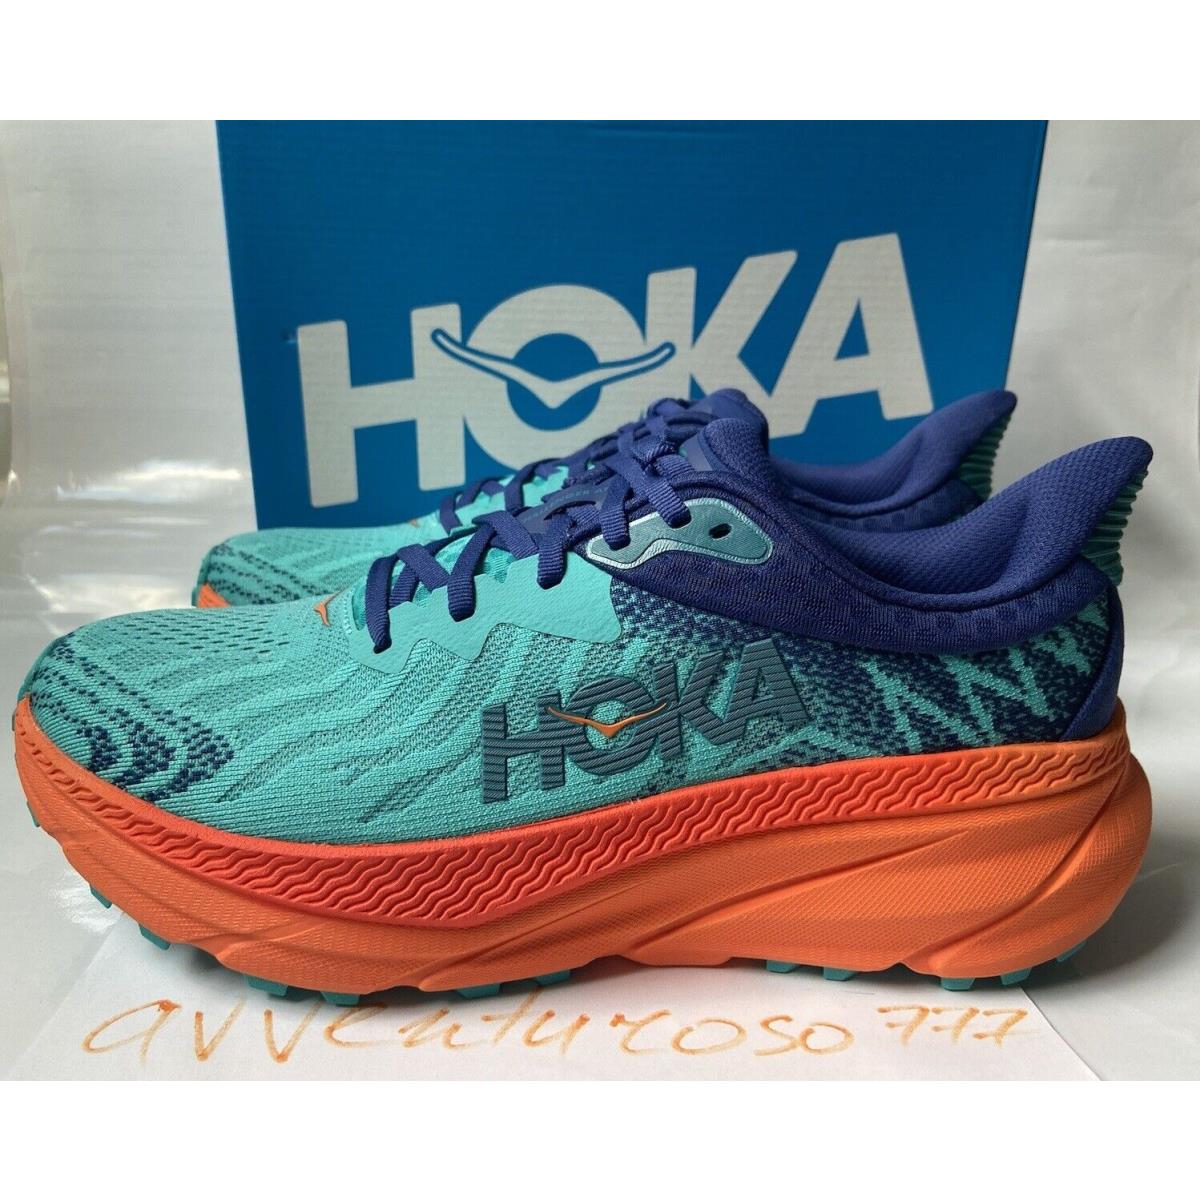 Hoka One One Challenger Atr 7 Size 9 Running Shoes Ceramic Orange 1134498